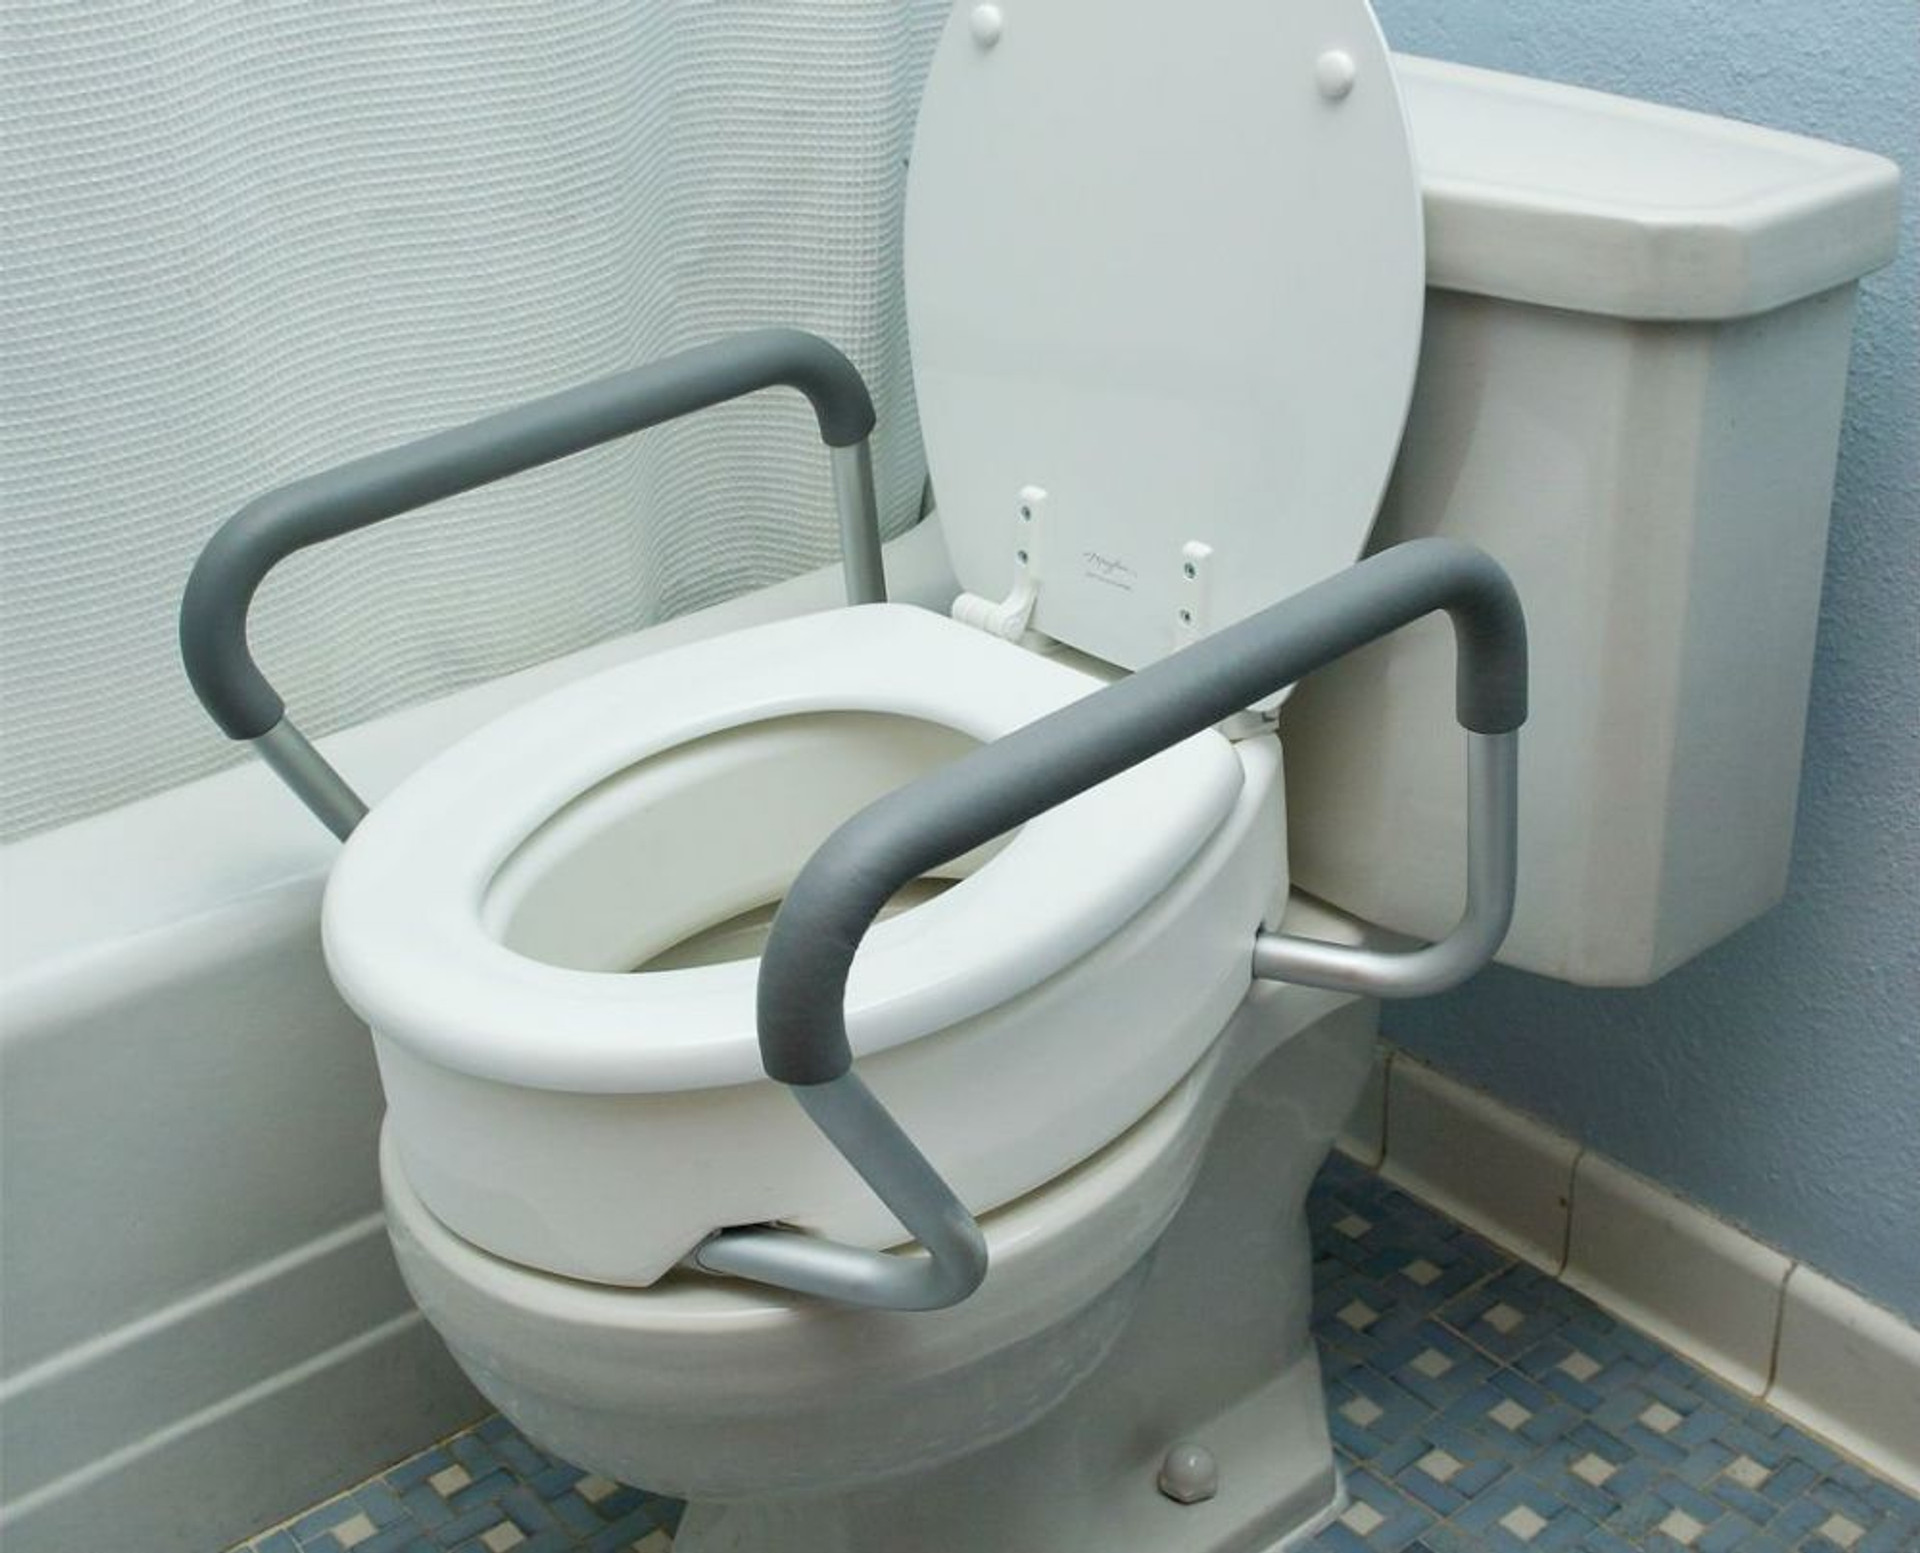 Куплю туалет б у. Унитаз для инвалидов ун-320.02 Люкс. Унитаз для инвалида с поручнем 9500/1.2/7.35. Насадка на унитаз RPM 67032. Туалет-сиденье насадка на унитаз е0905.